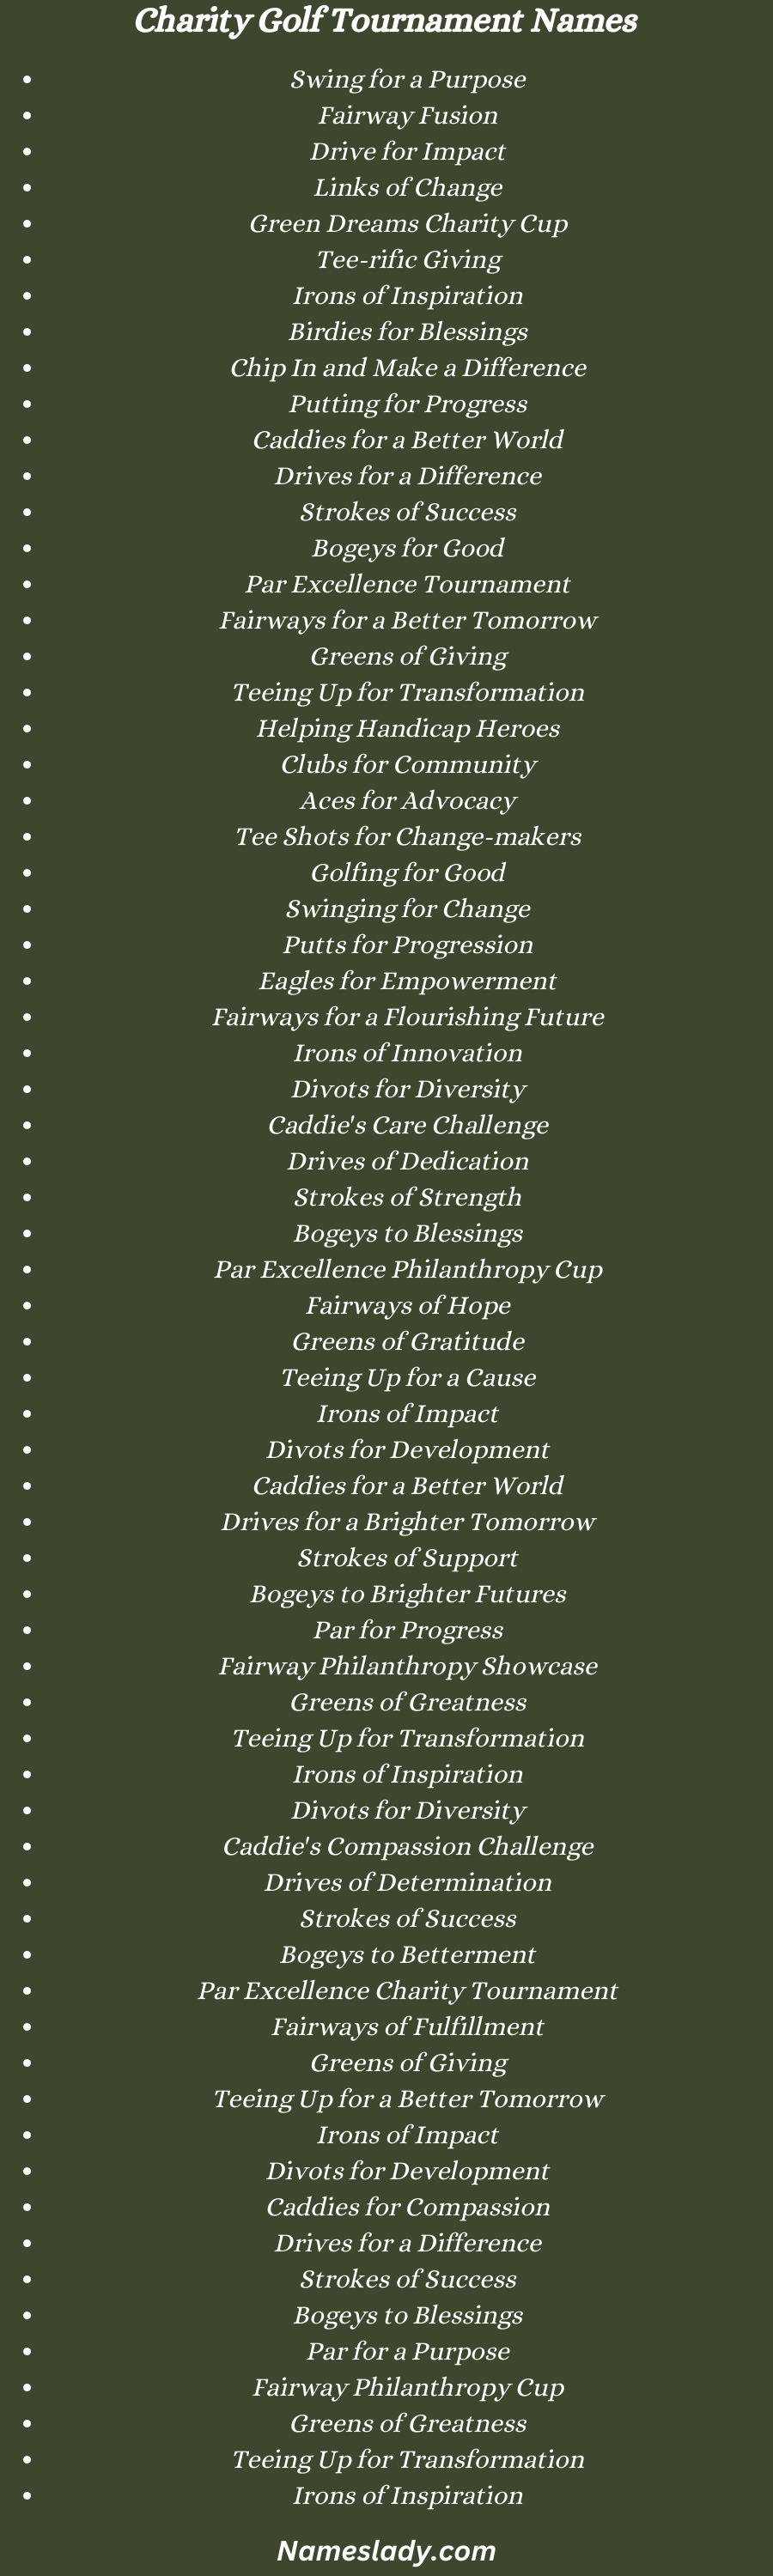 Charity Golf Tournament Names